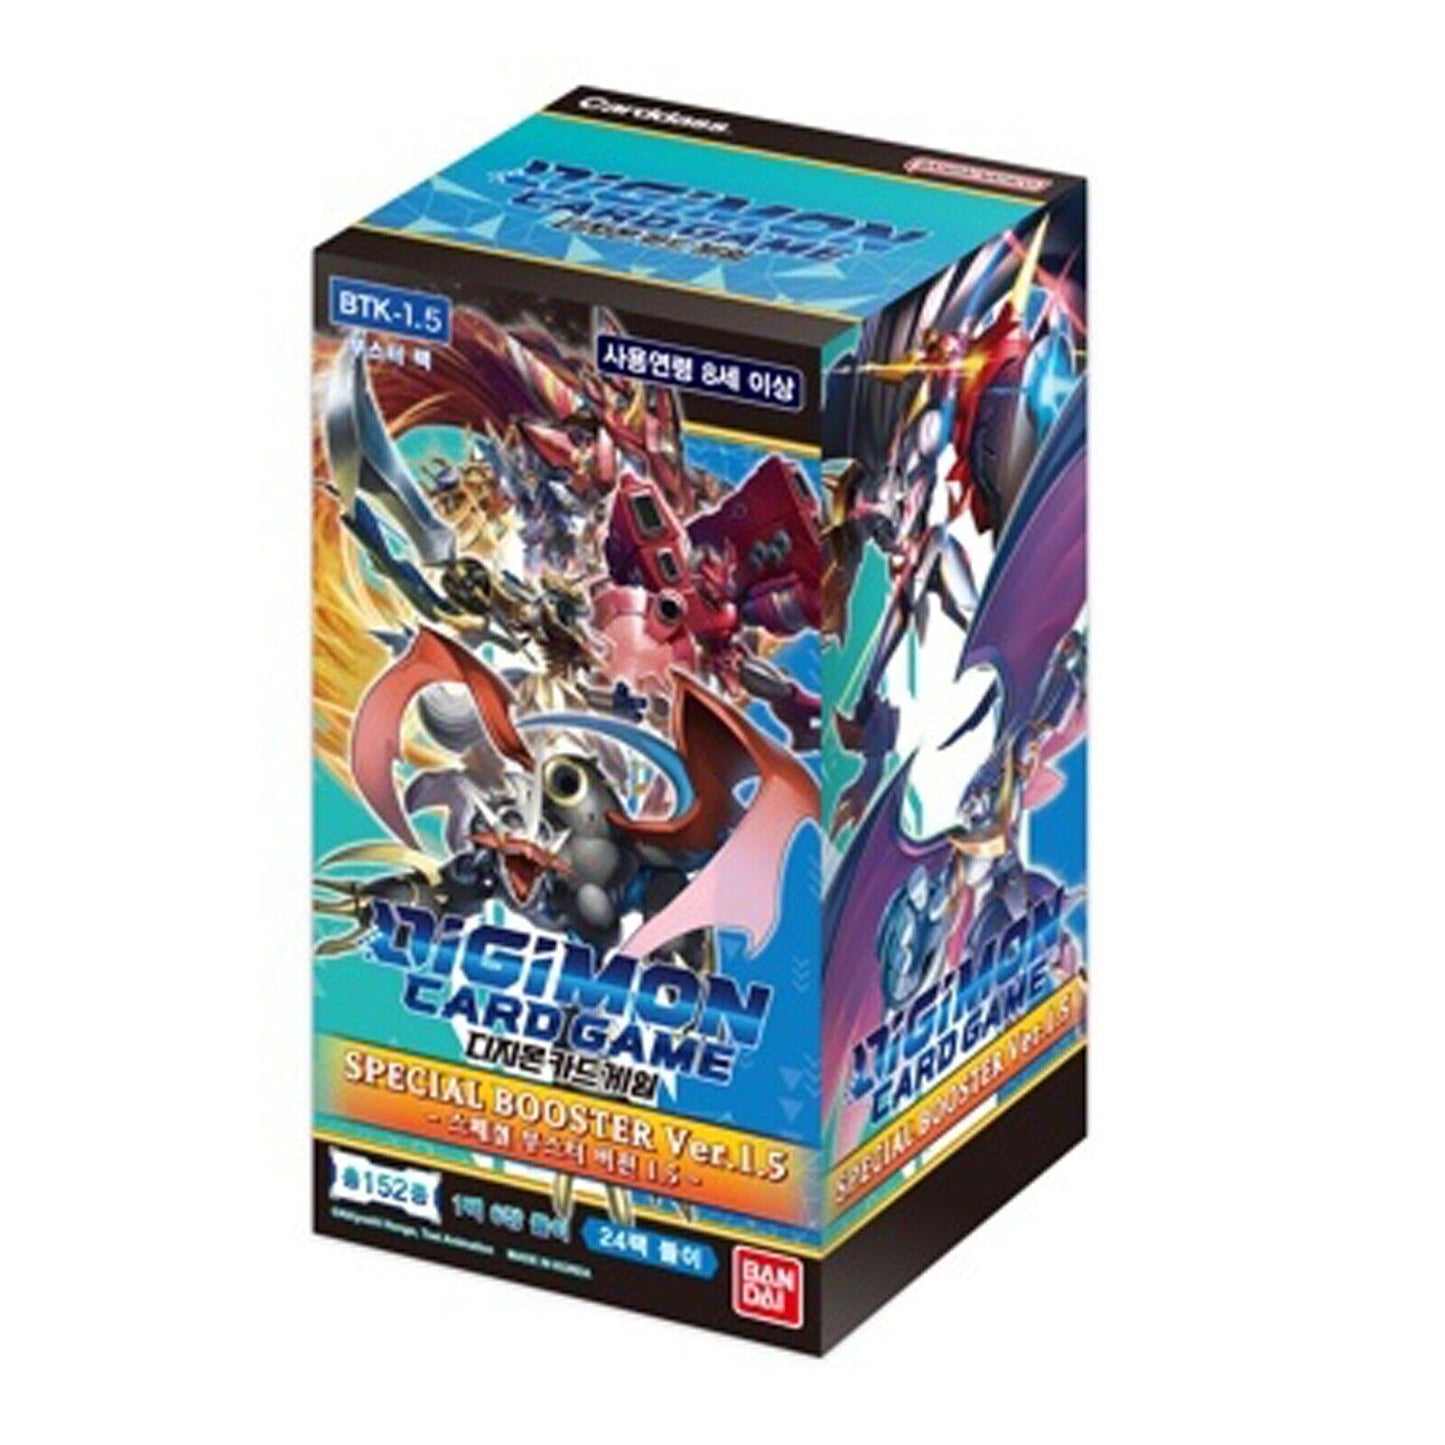 Digimon Card Game Special Booster Version 1.5 Box Korean Ver./BTK-1.5